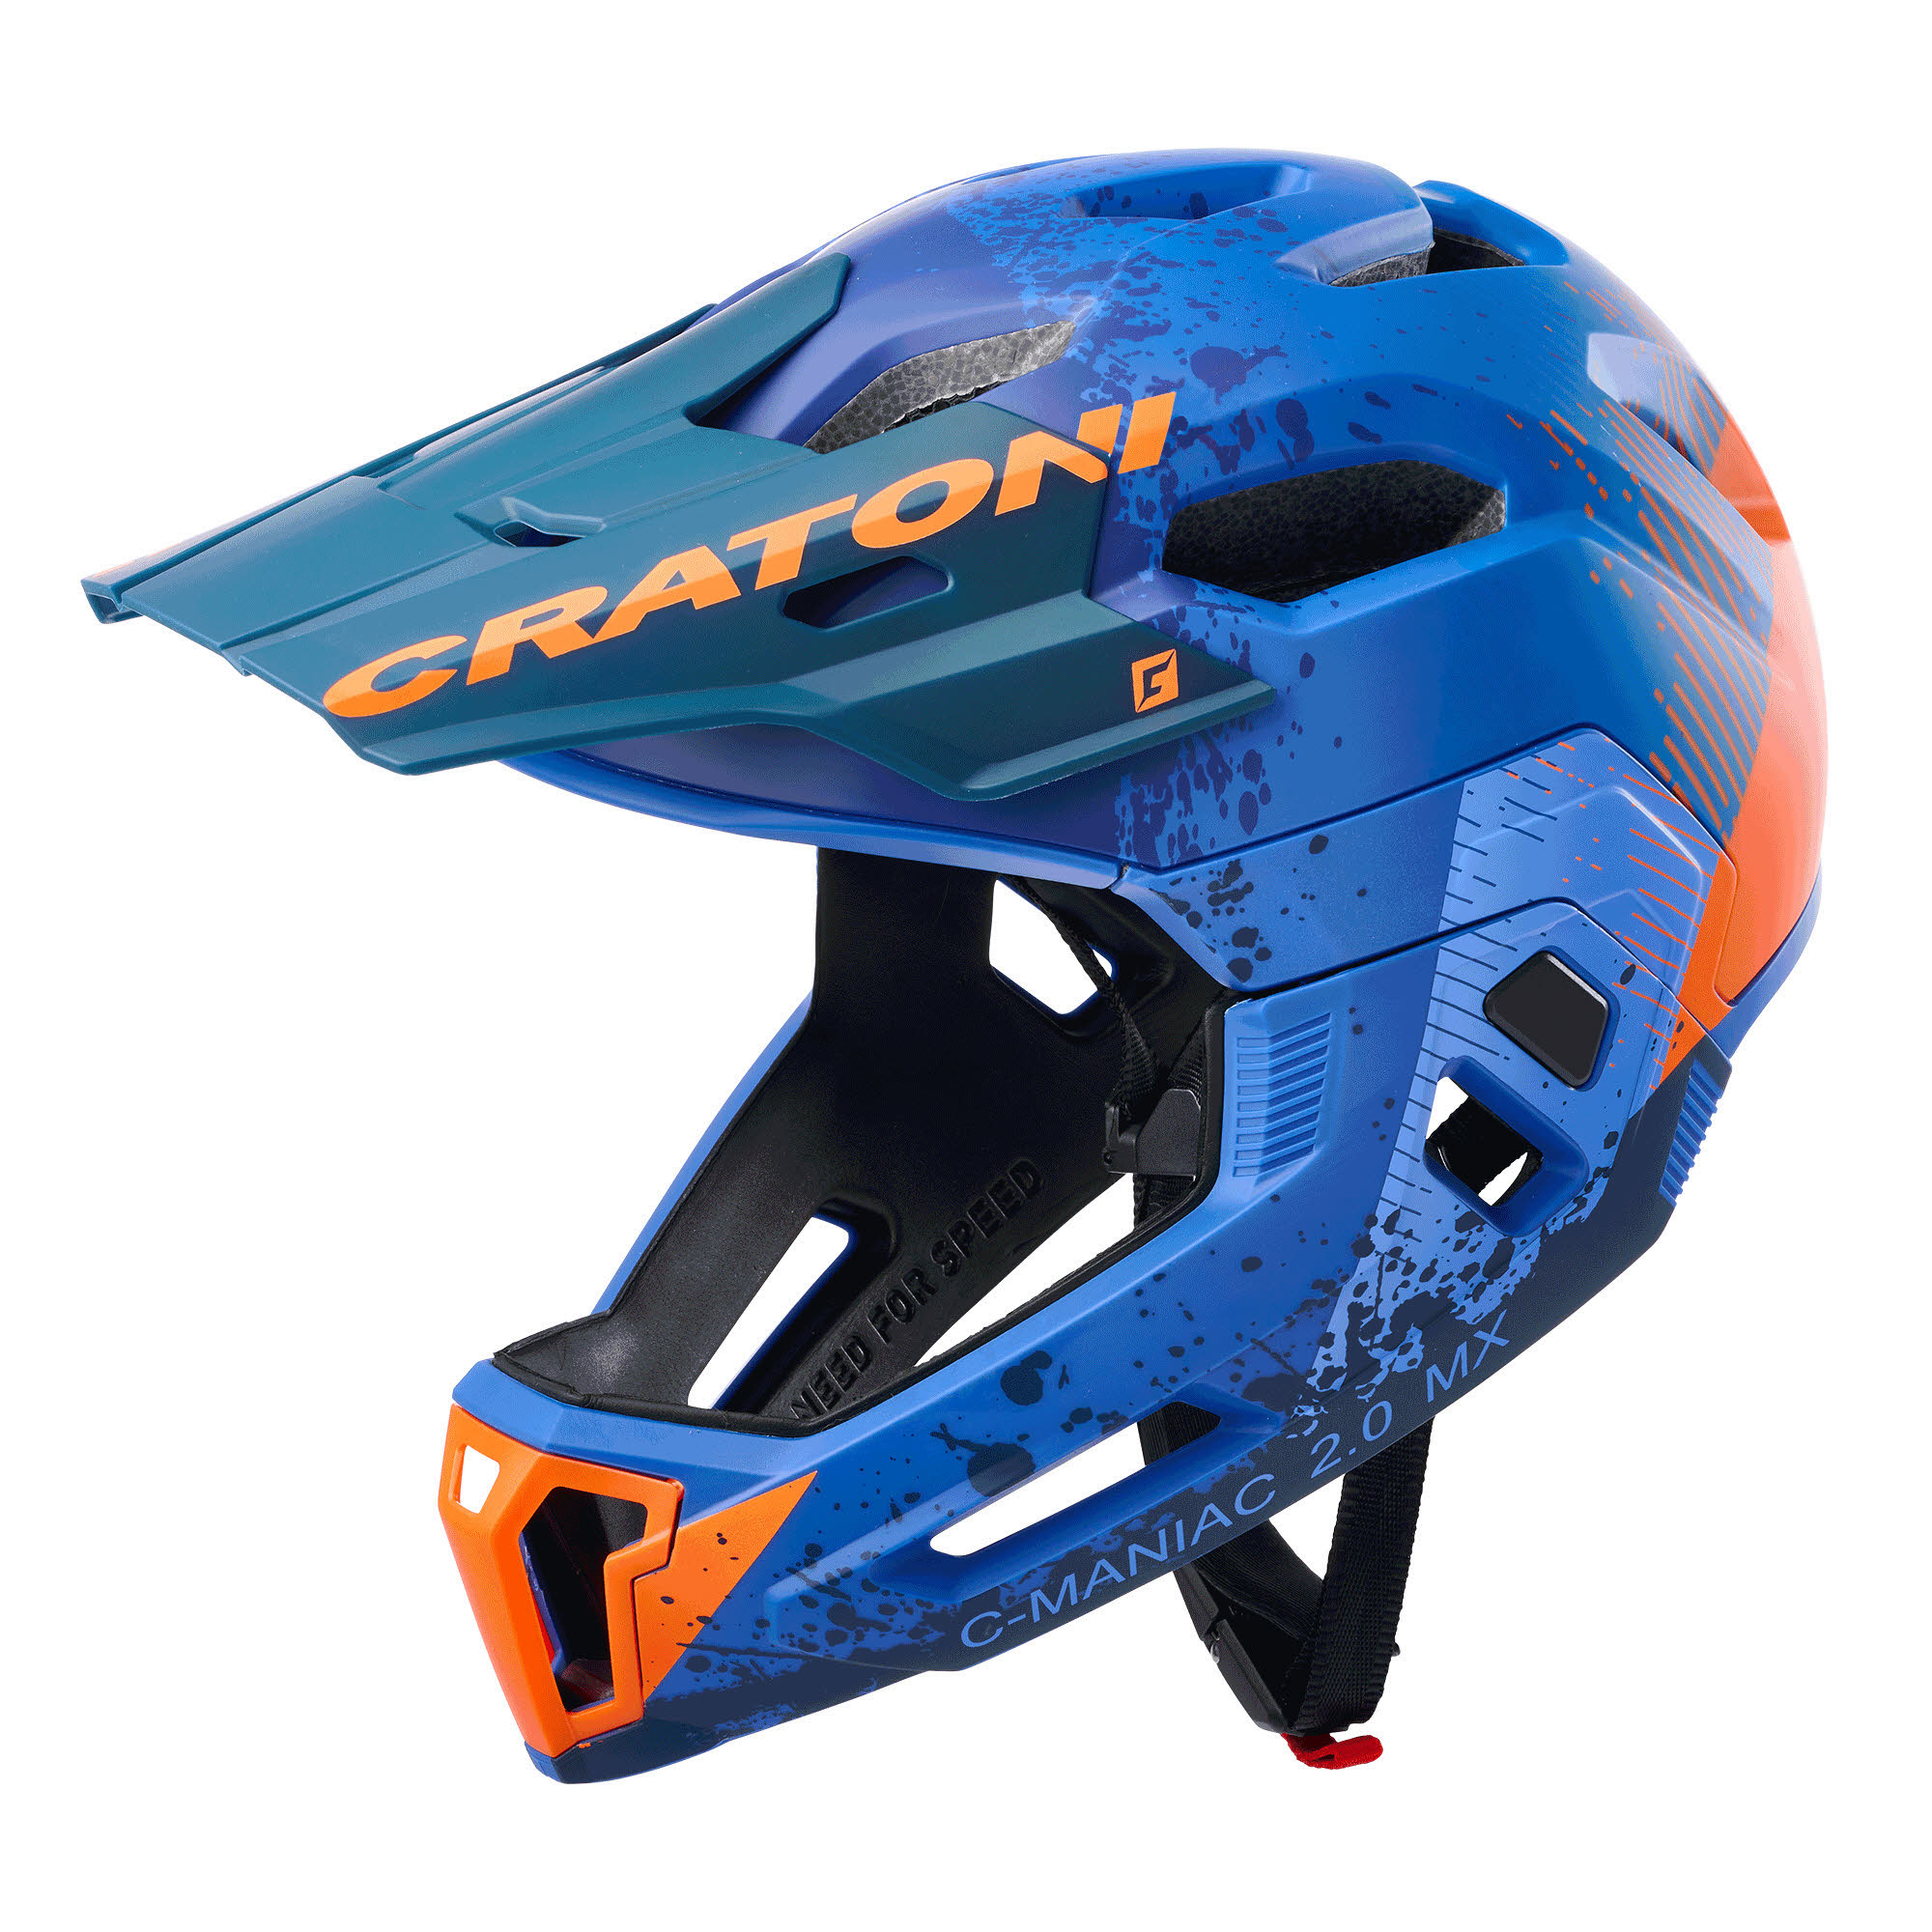 Cratoni C-Maniac 2.0 MX Herren Fahrradhelm leicht belüftet Schutz Komfort Trail Radtour blau NEU